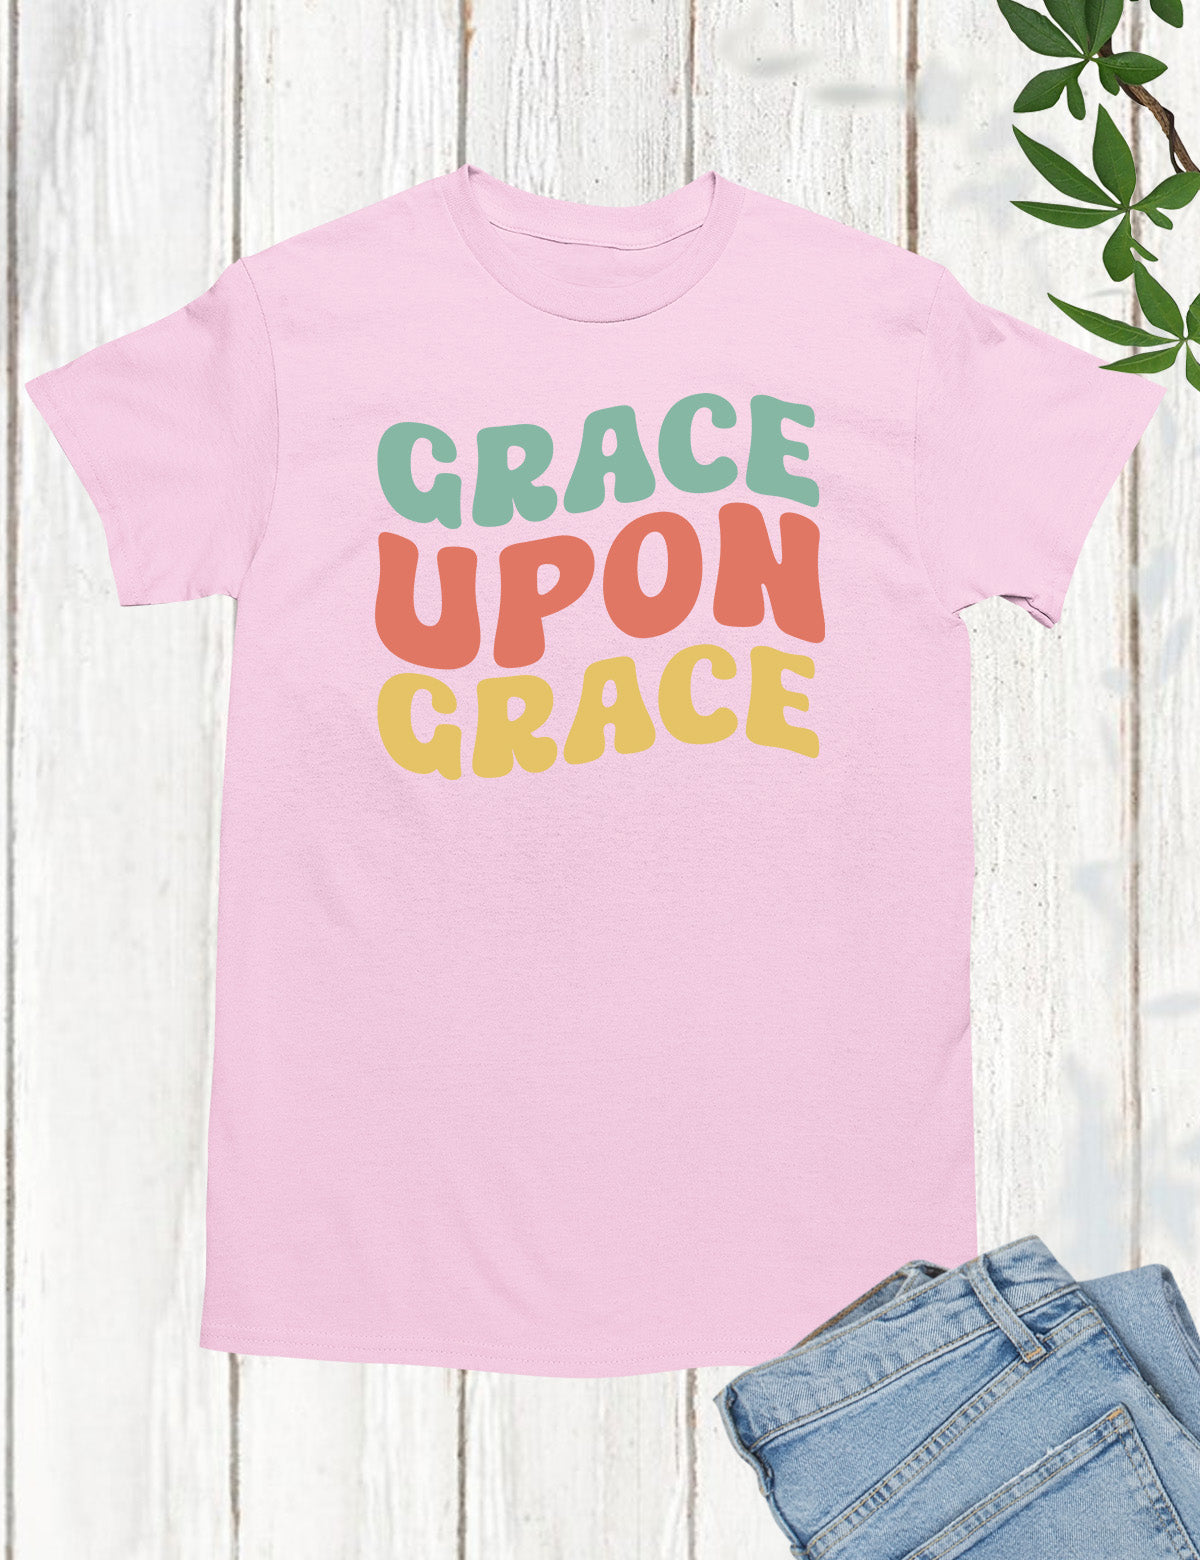 Grace Upon Grace Christian Shirt